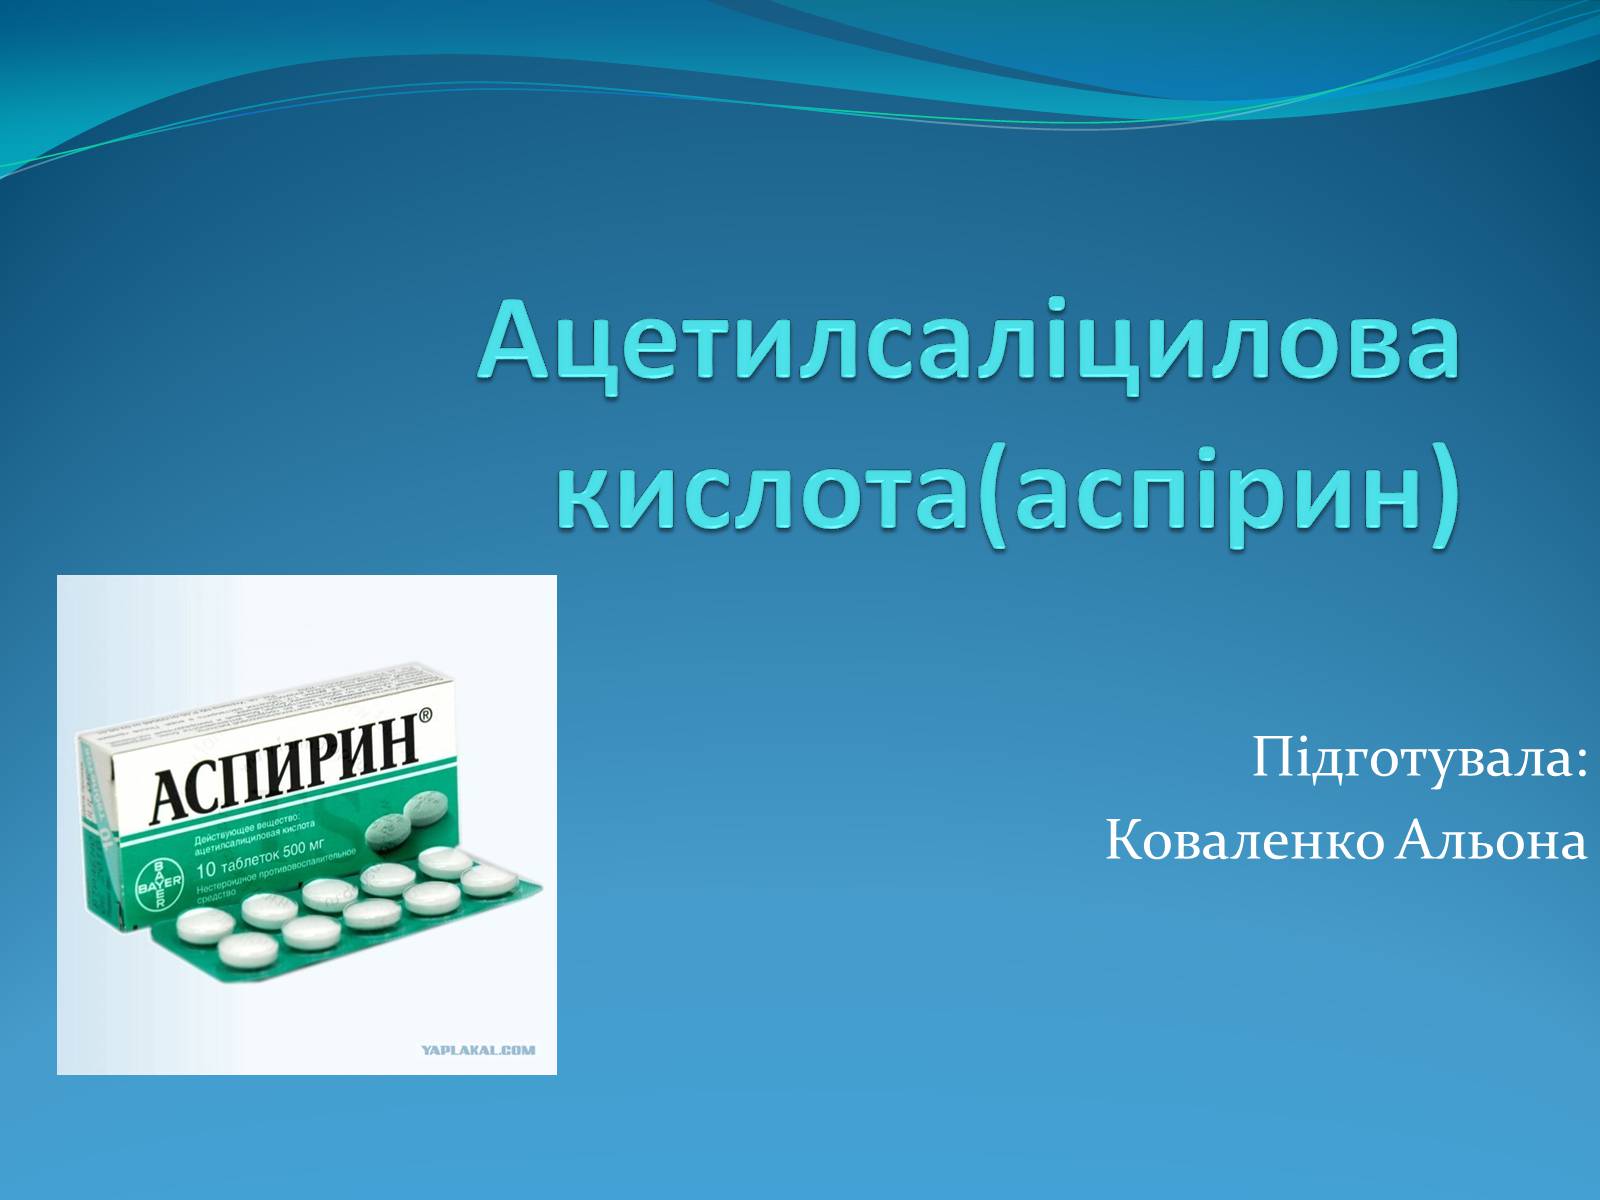 Презентація на тему «Ацетилсаліцилова кислота(аспірин)» - Слайд #1